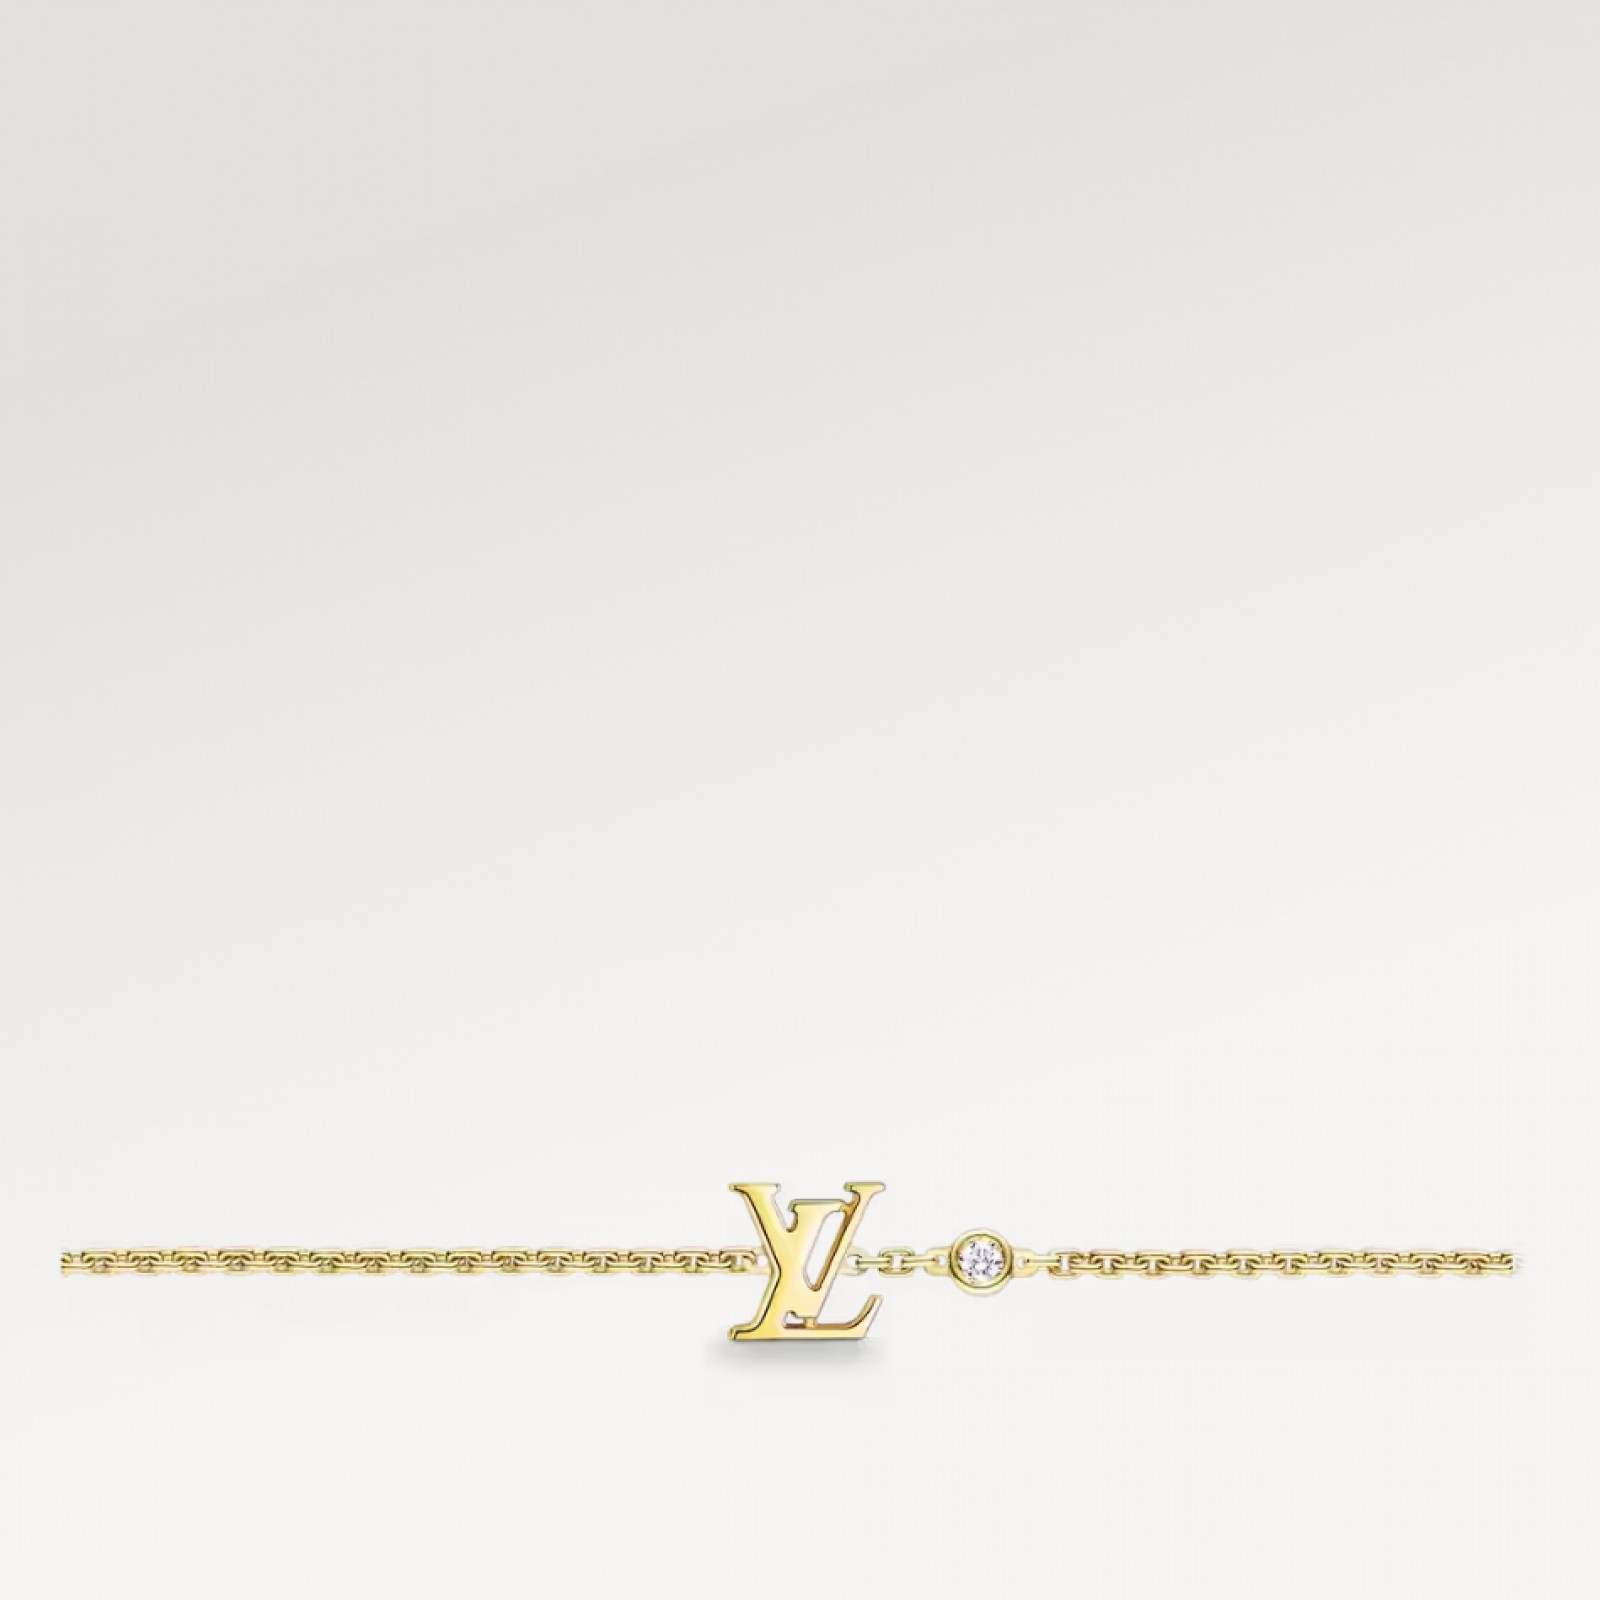 Idylle Blossom LV Bracelet, Yellow gold and diamond